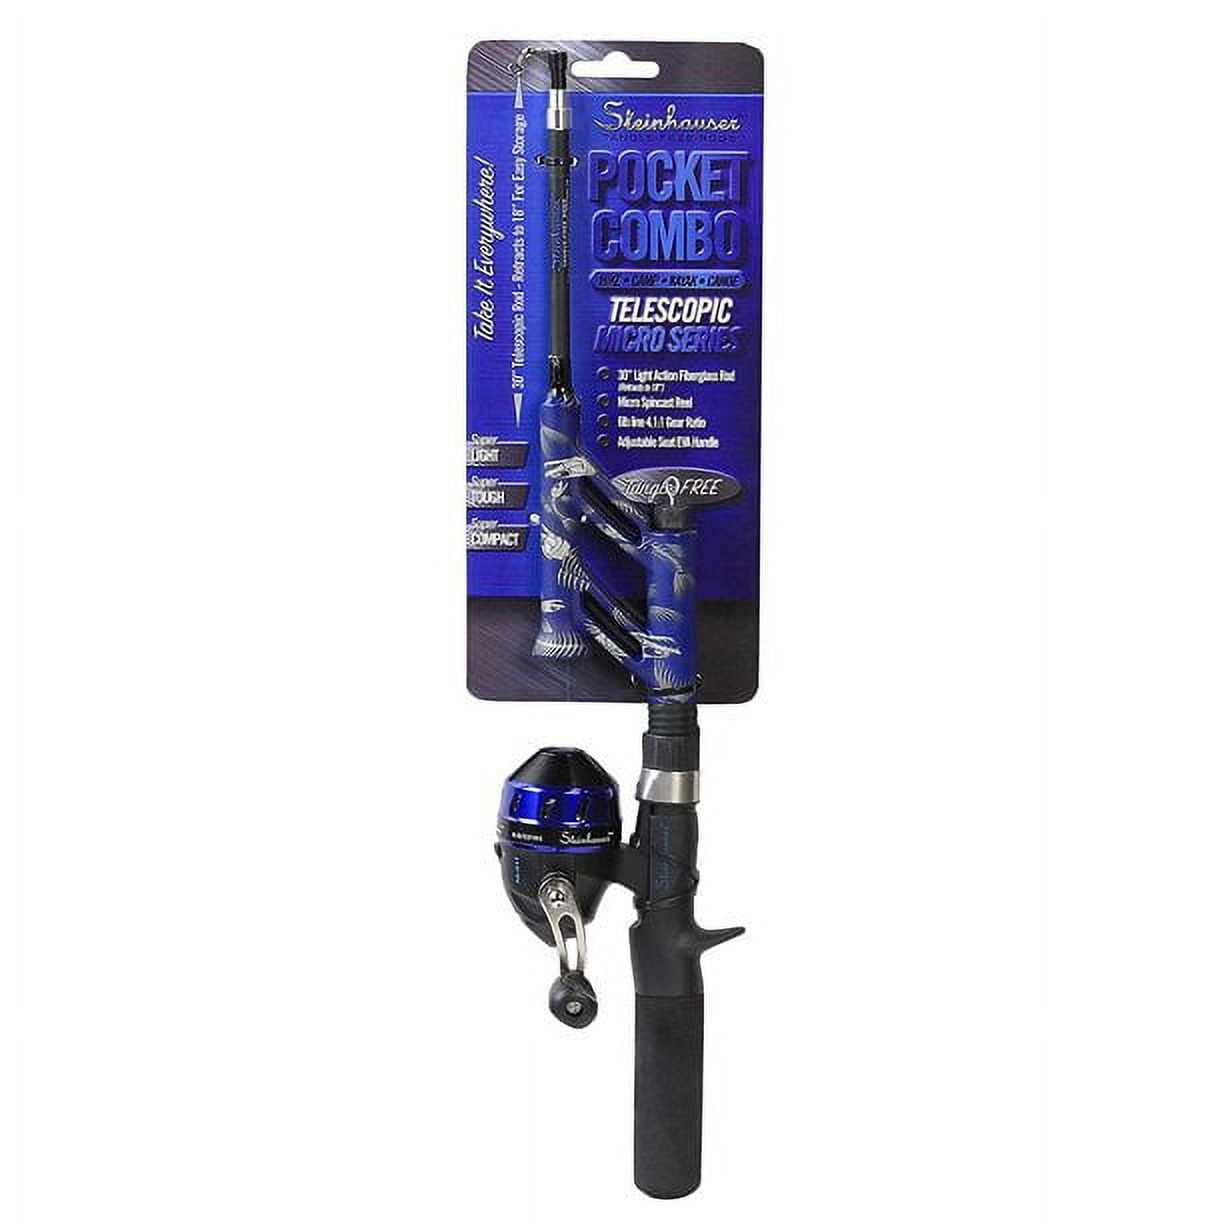 ProFISHiency Blue Telescopic Micro Pocket Fishing Rod and Spincast